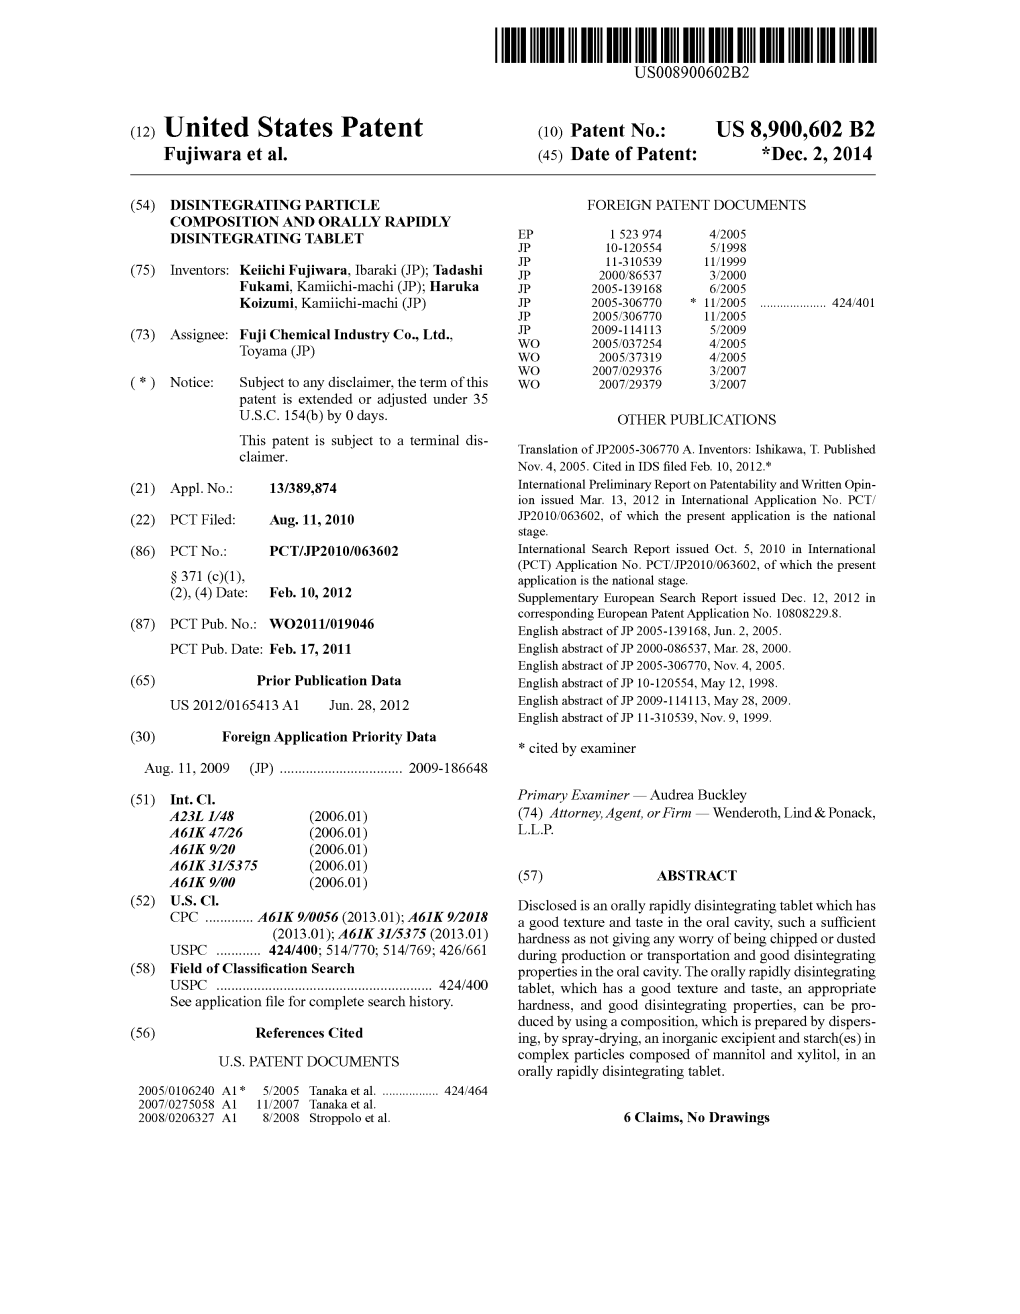 (12) United States Patent (10) Patent No.: US 8,900,602 B2 Fujiwara Et Al